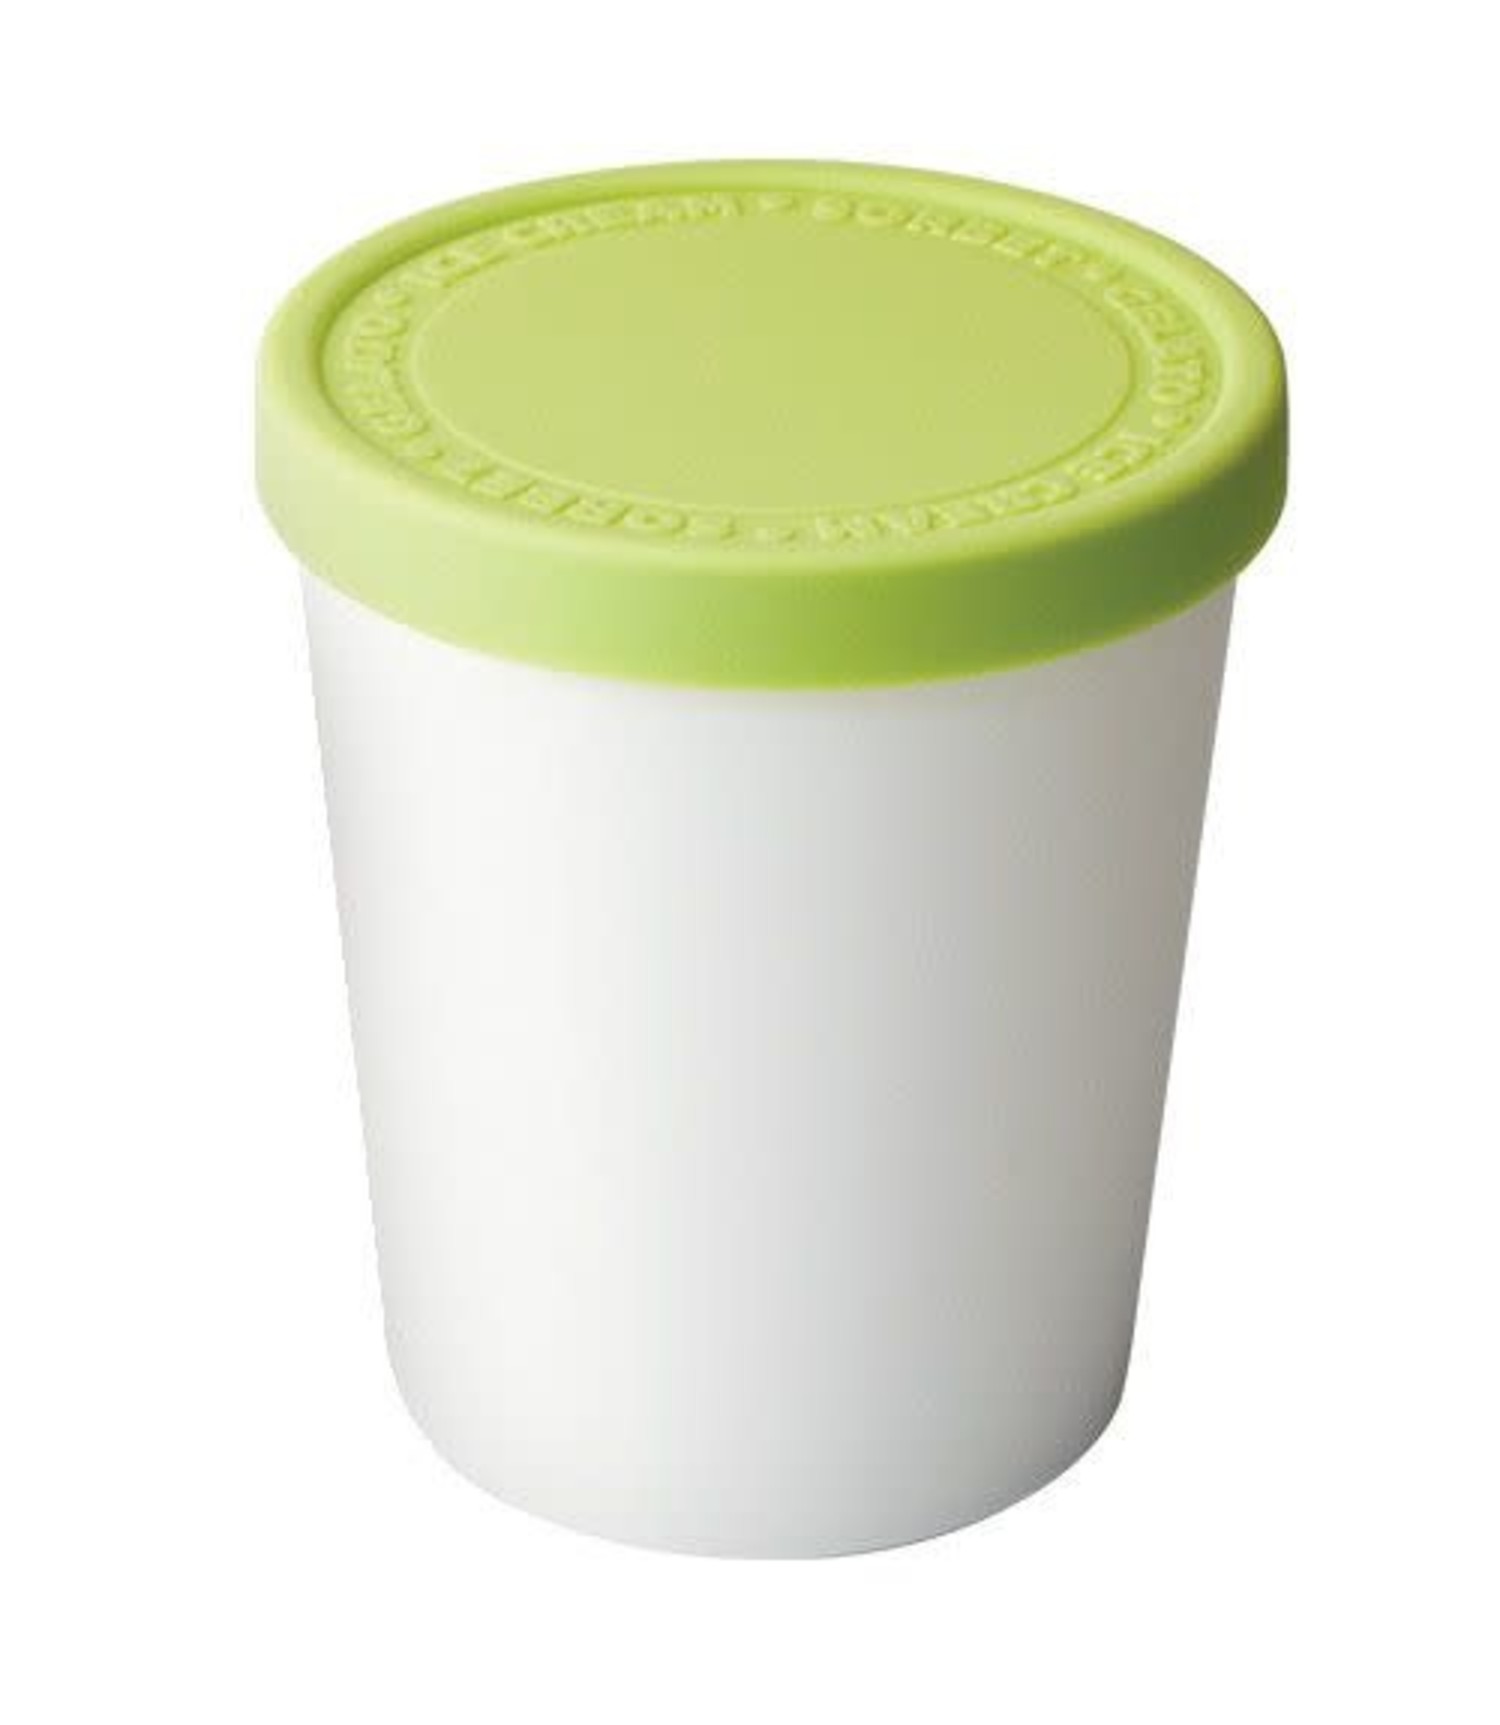 https://cdn.shoplightspeed.com/shops/633447/files/20001012/1500x4000x3/tovolo-1-quart-ice-cream-tub-with-pistachio-green.jpg